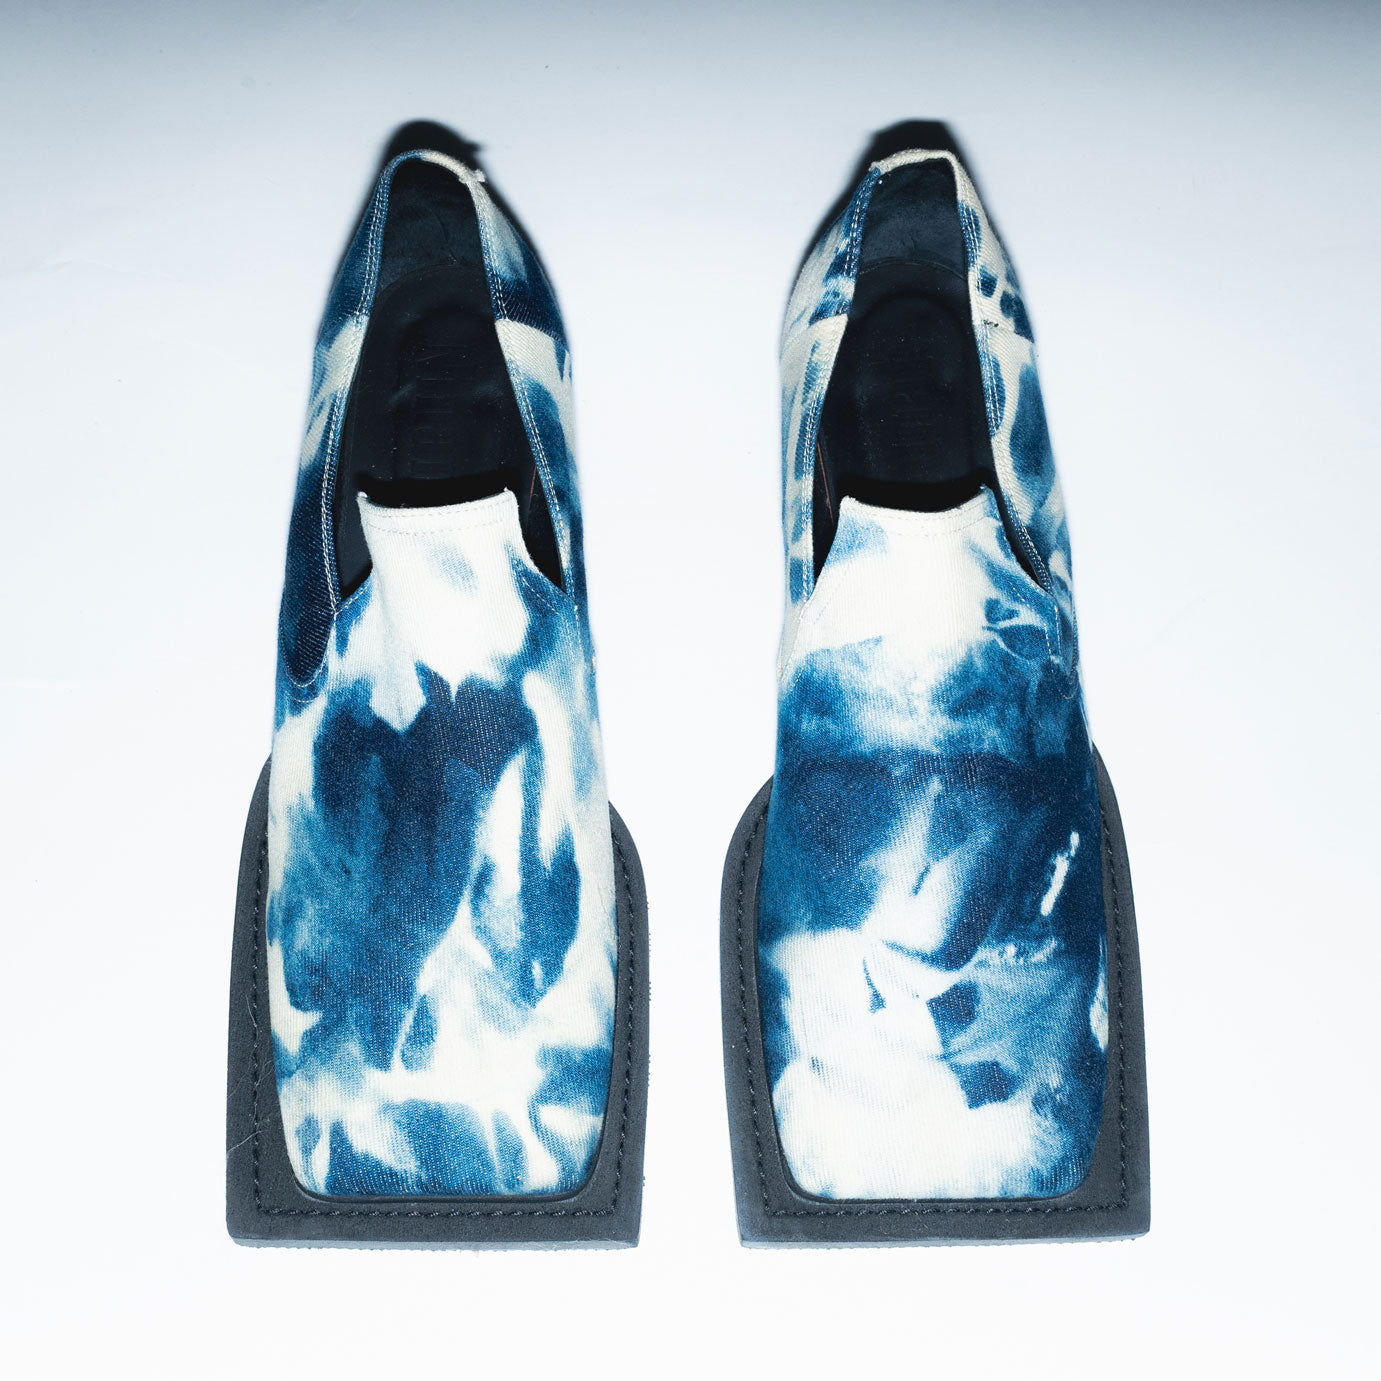 Archive Howled Loafers in Tie Dye Blue Denim